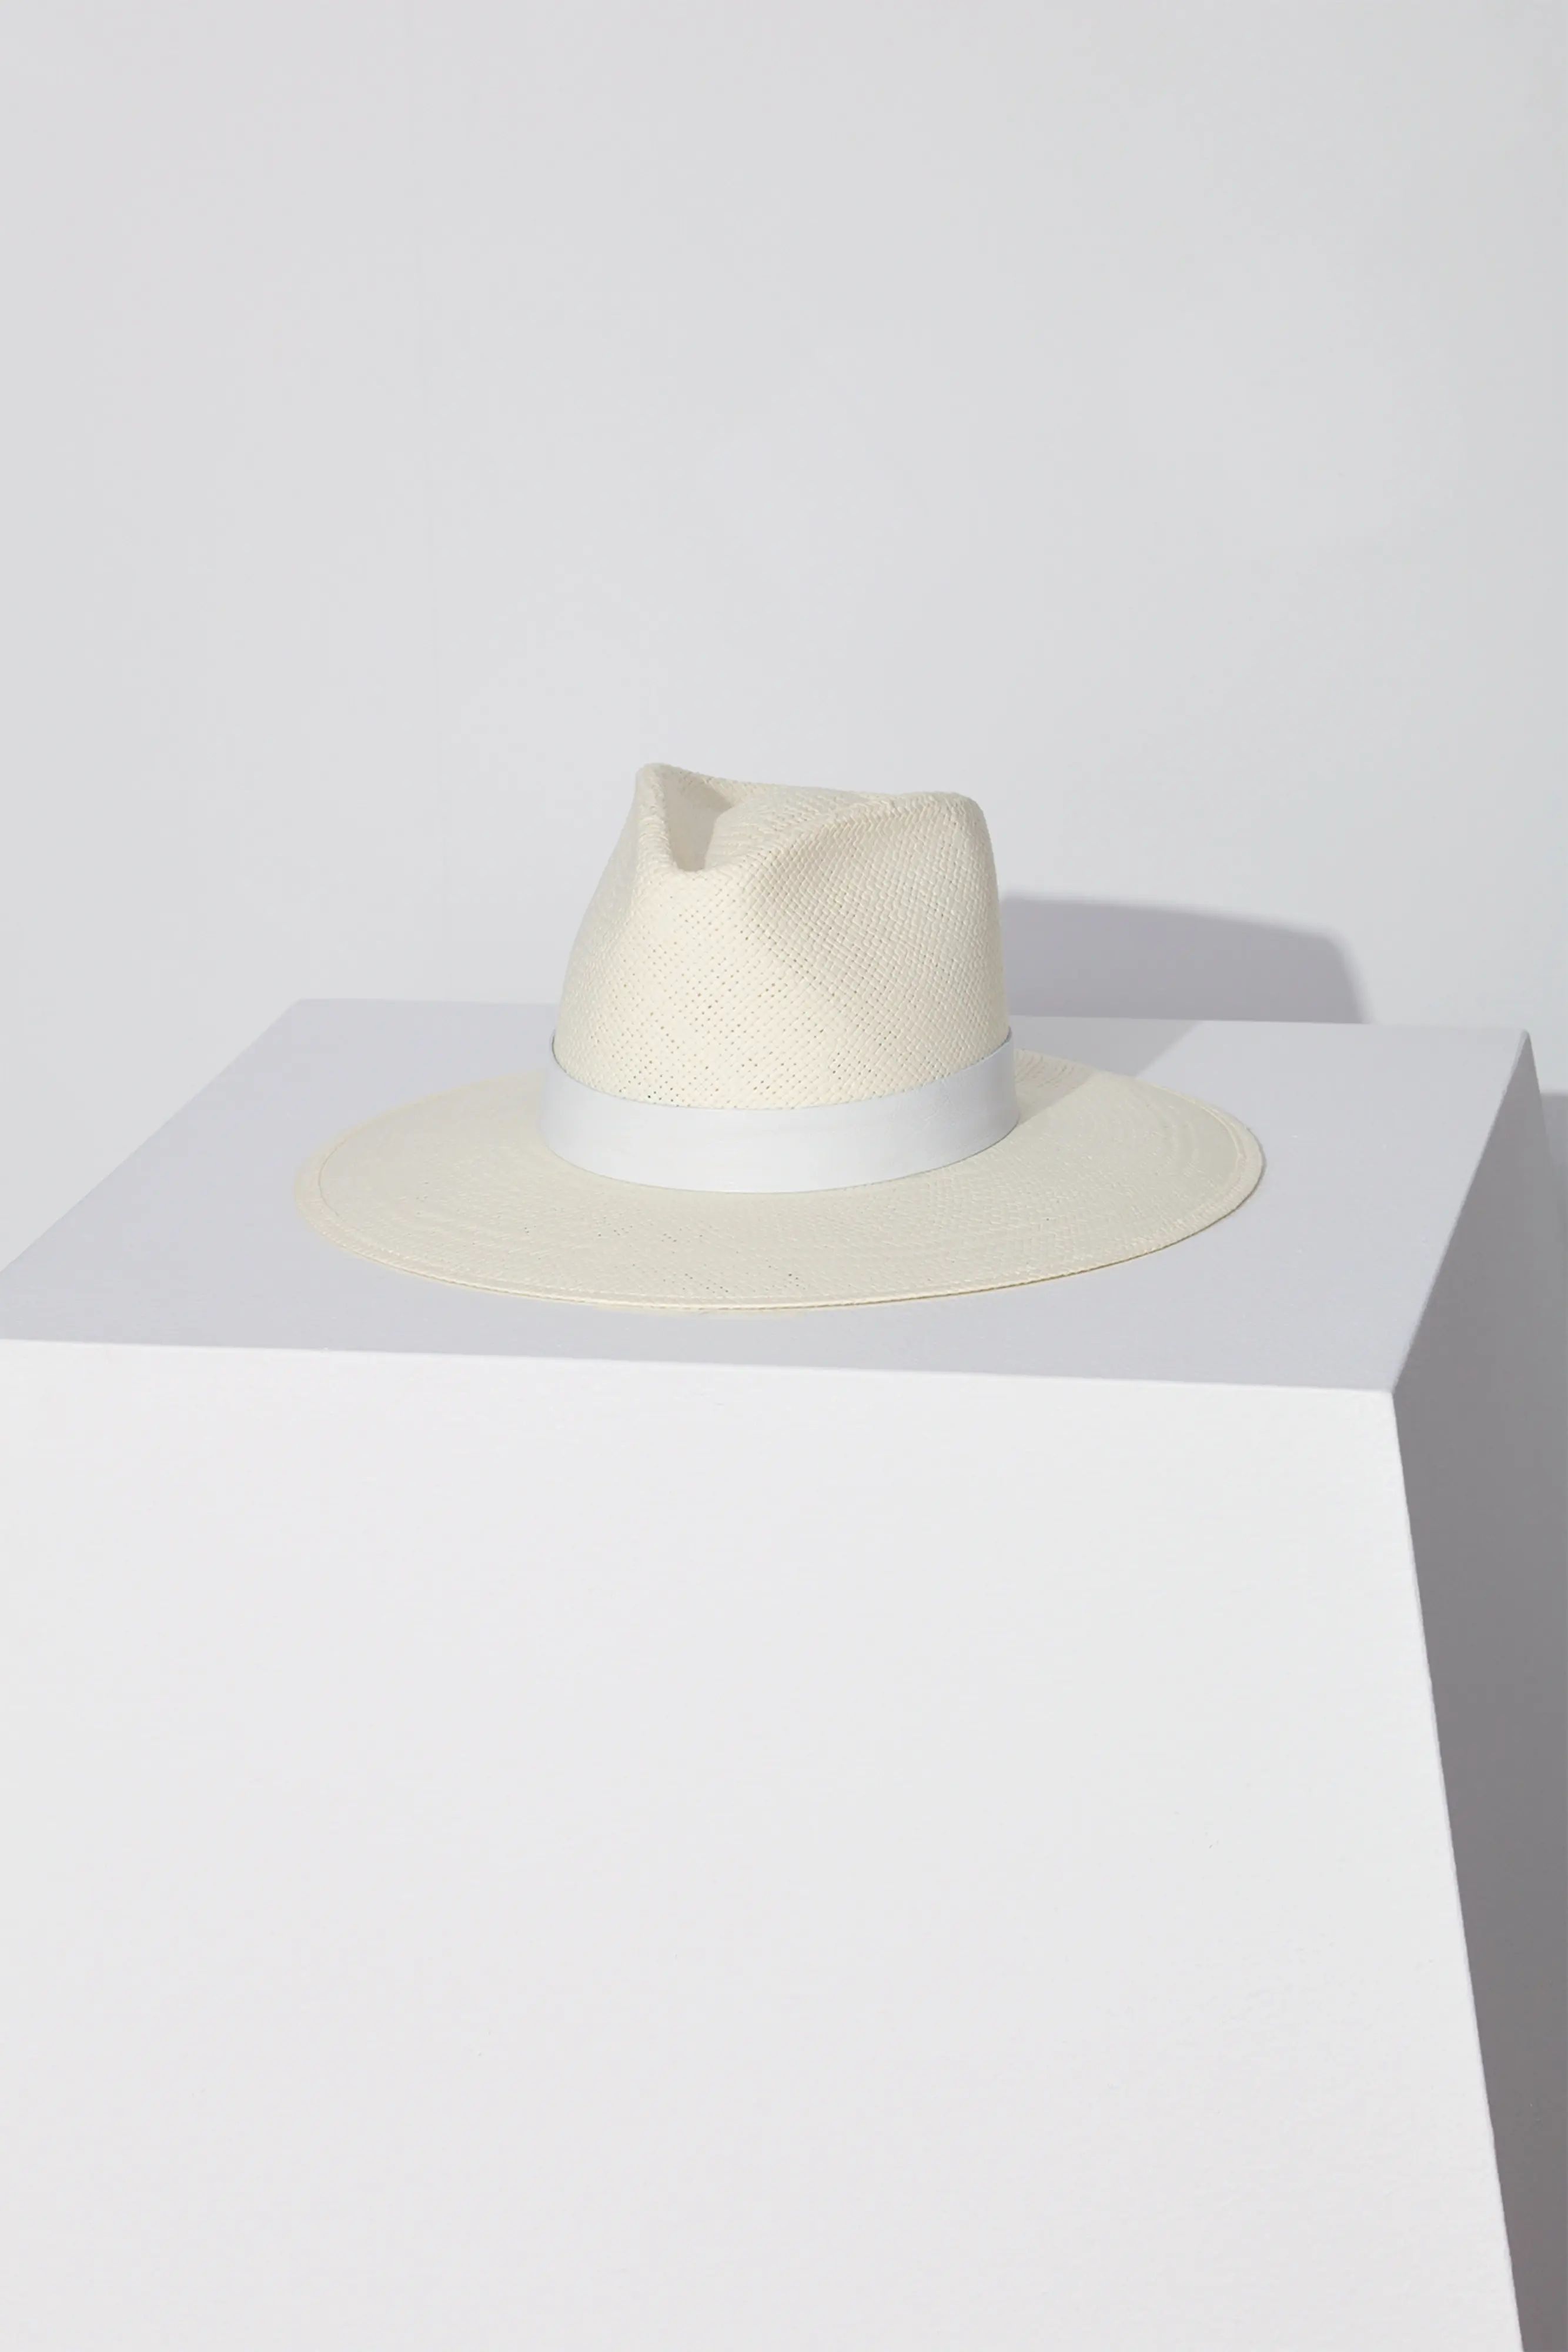 Hamilton Hat | Janessa Leone